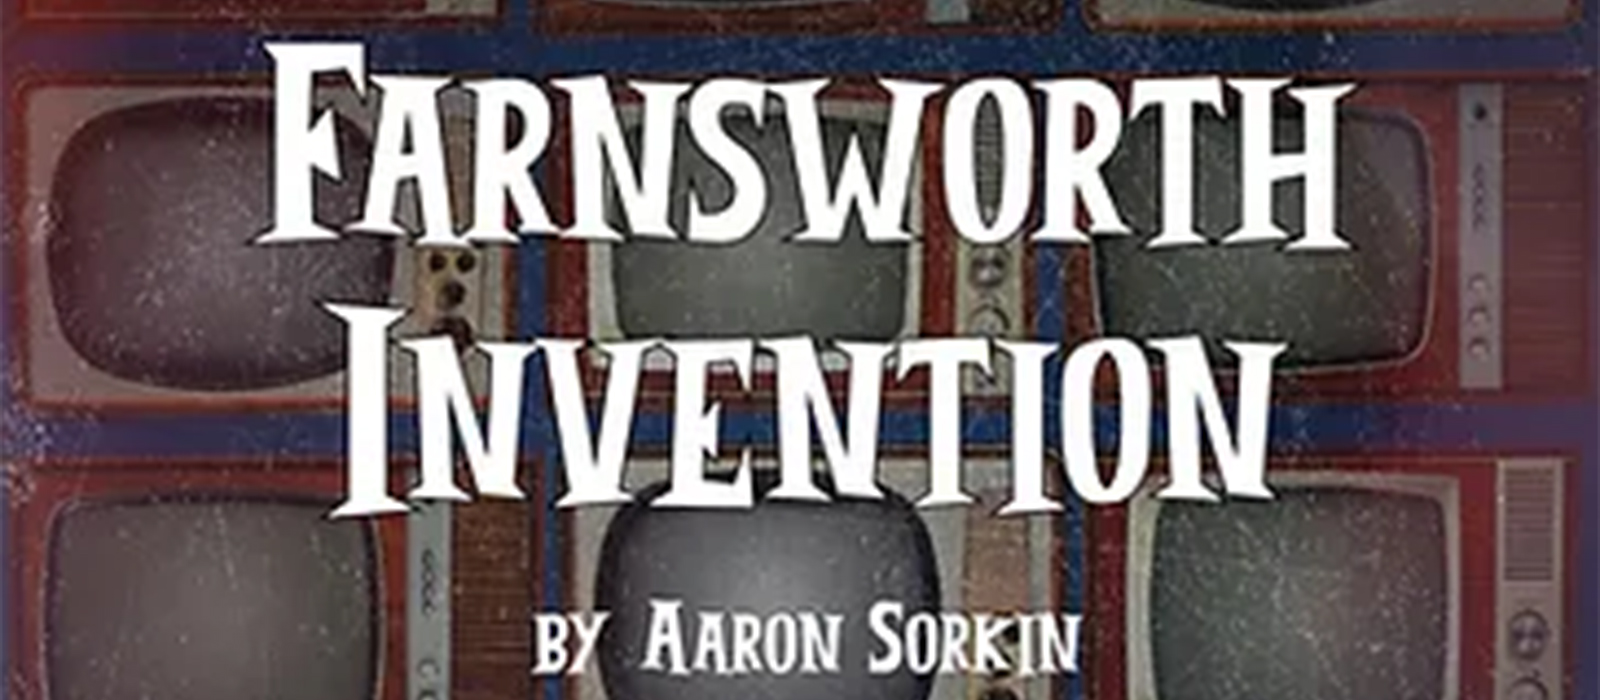 The Farnsworth Invention banner